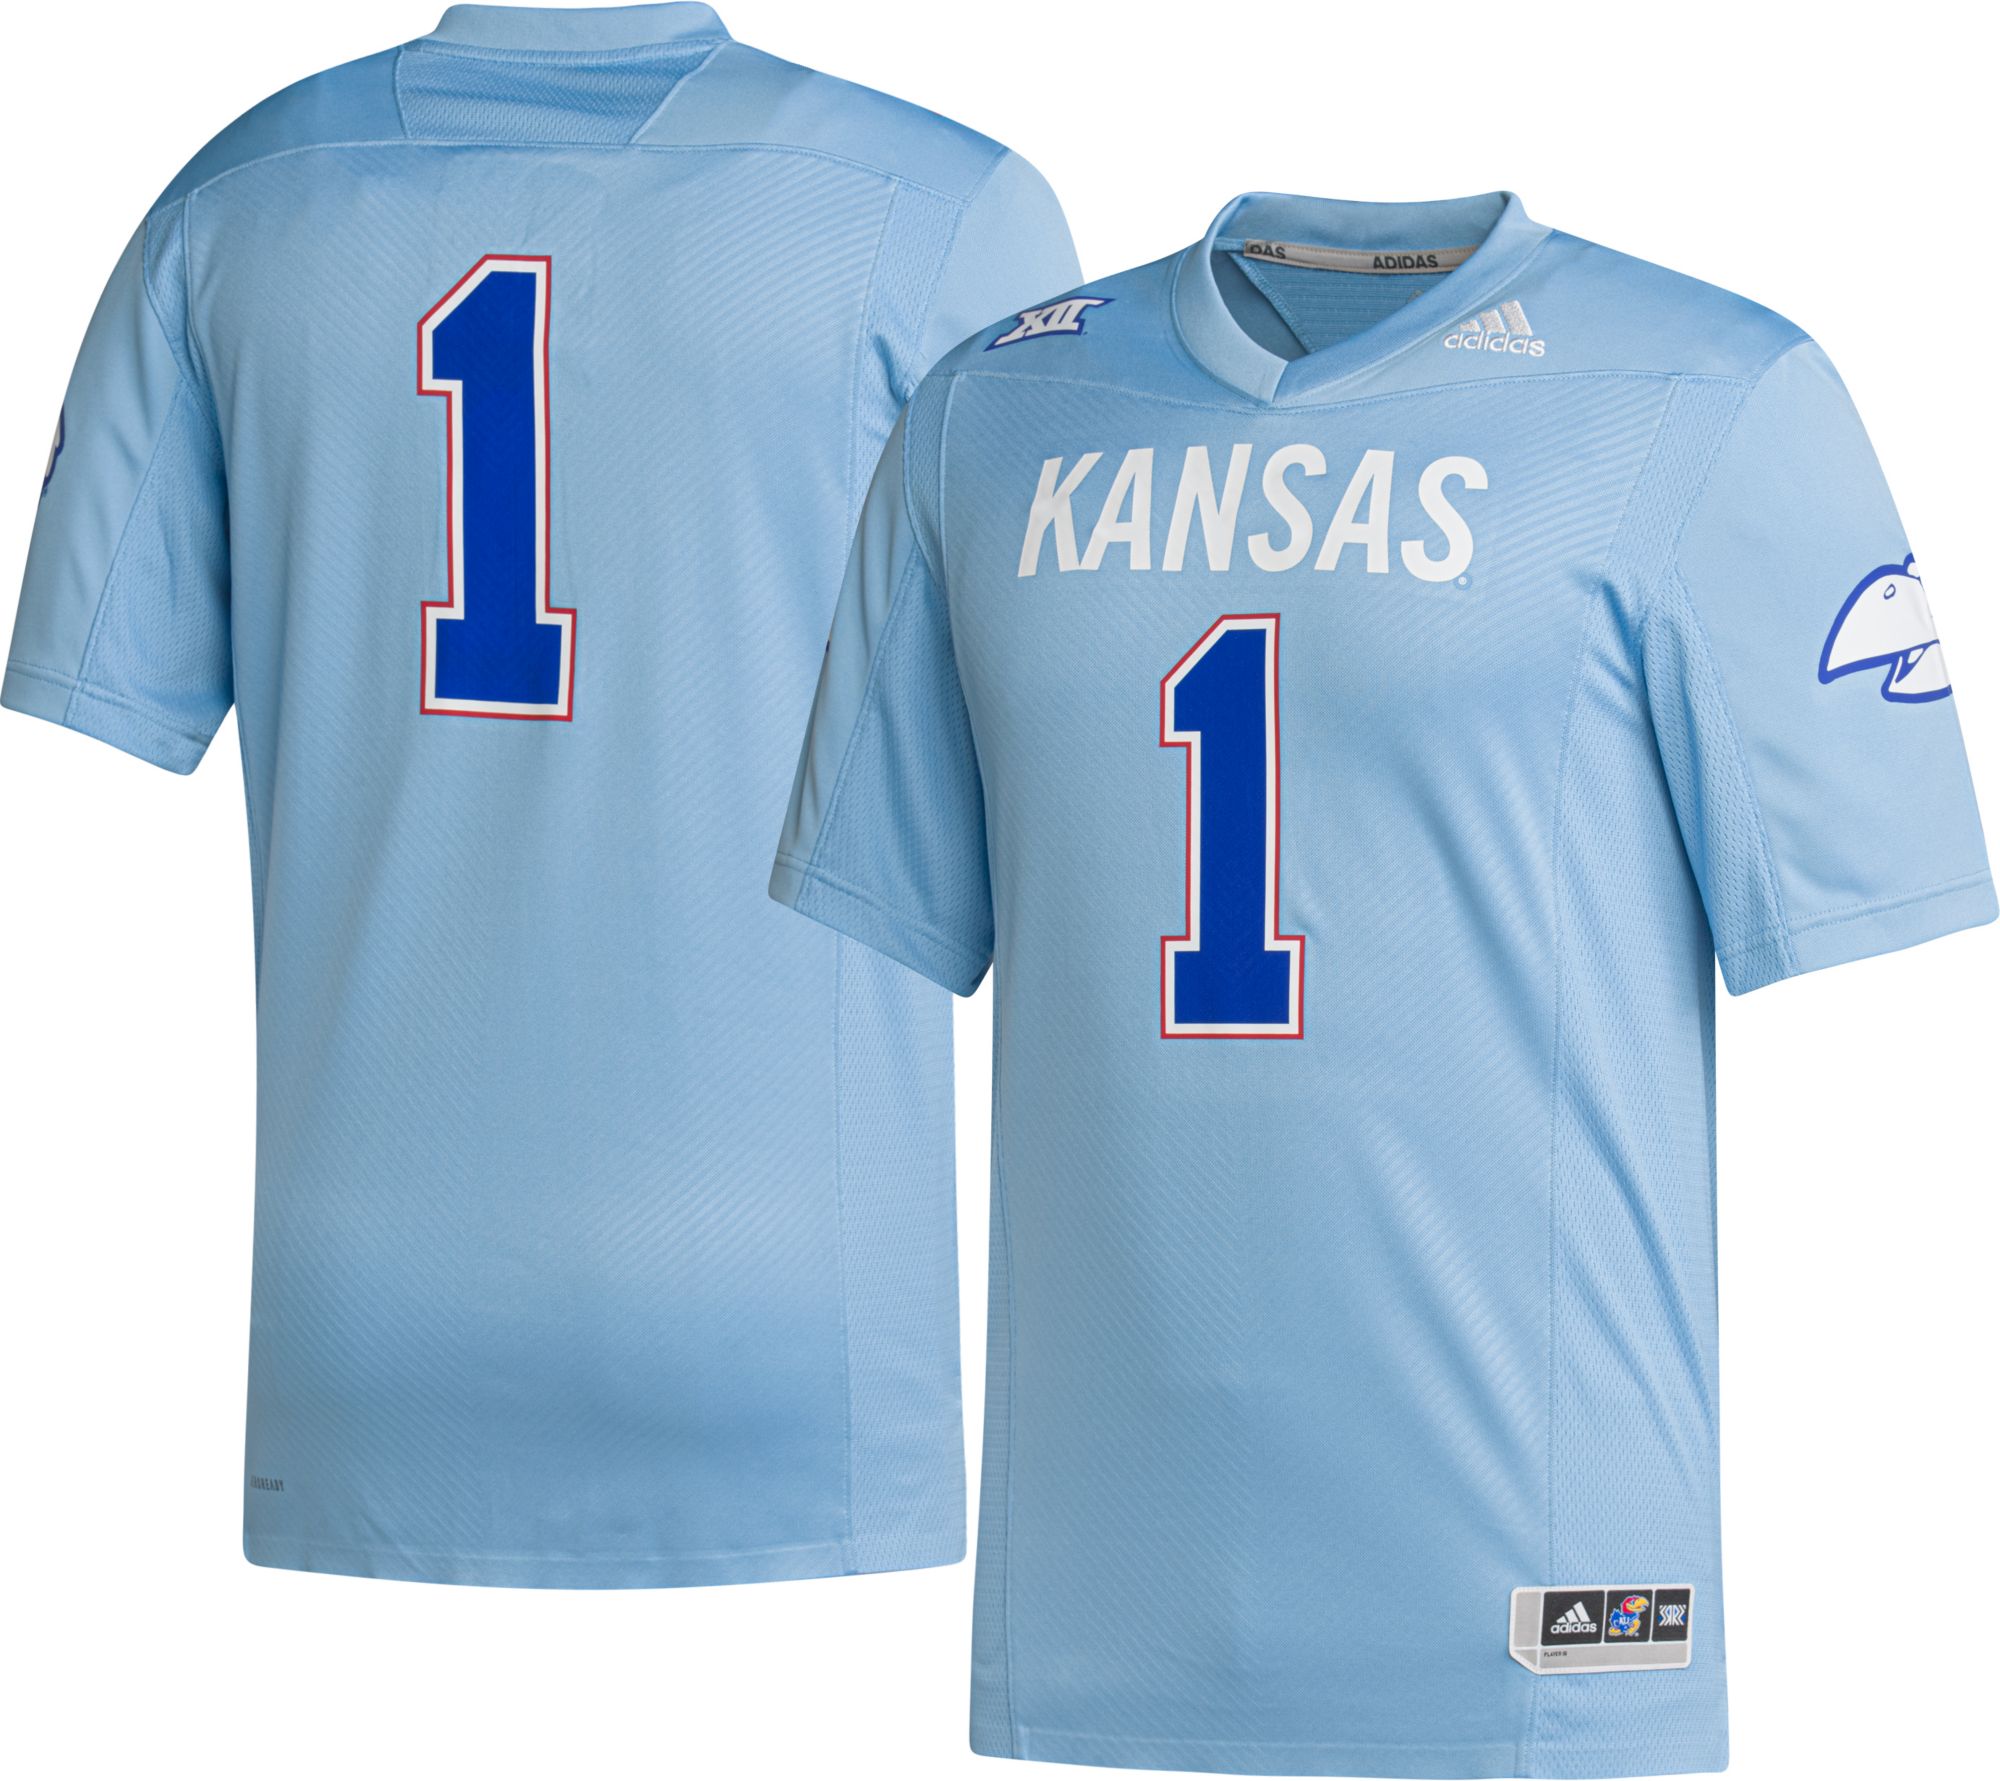 Kansas Jayhawks Team-Issued Blue Jersey from the Baseball